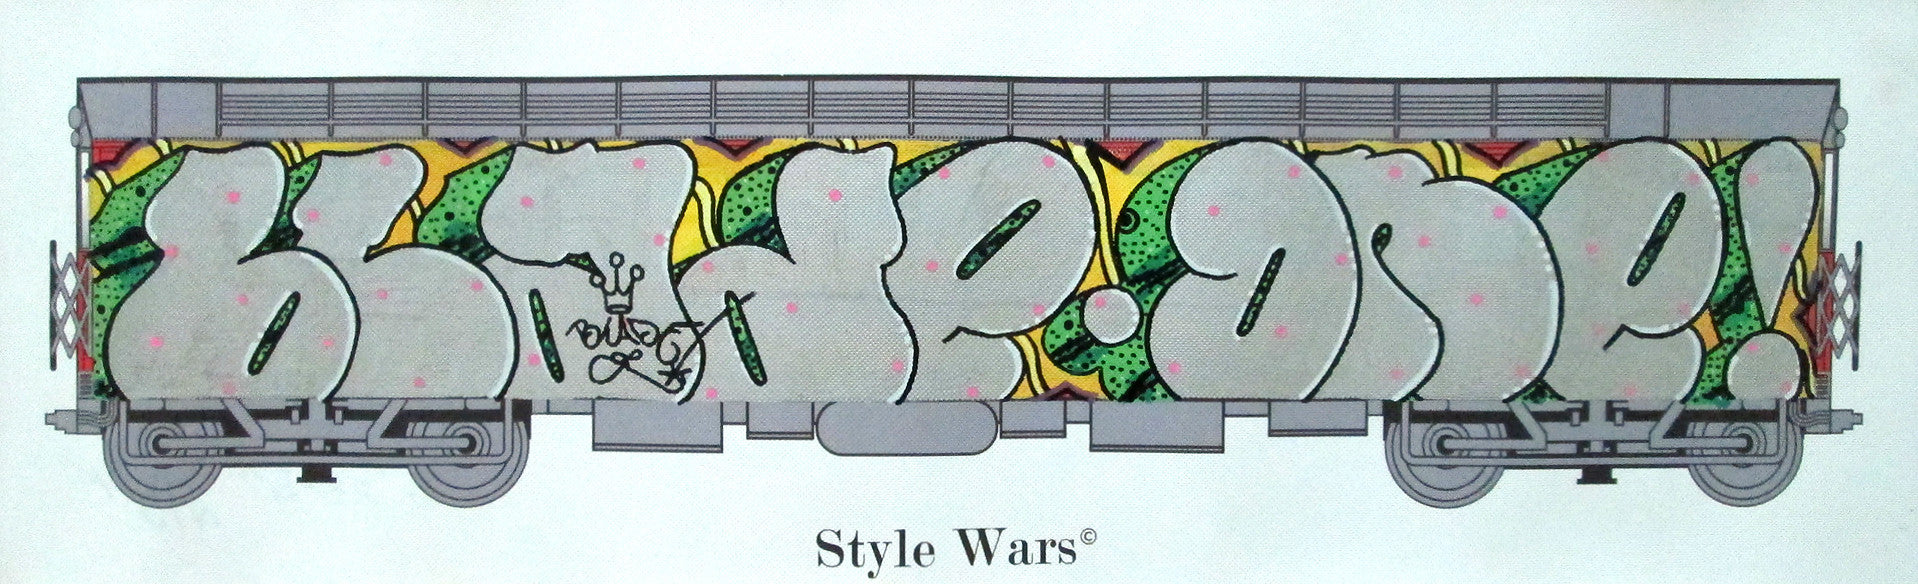 BLADE  "Style Wars"  Piece on Canvas